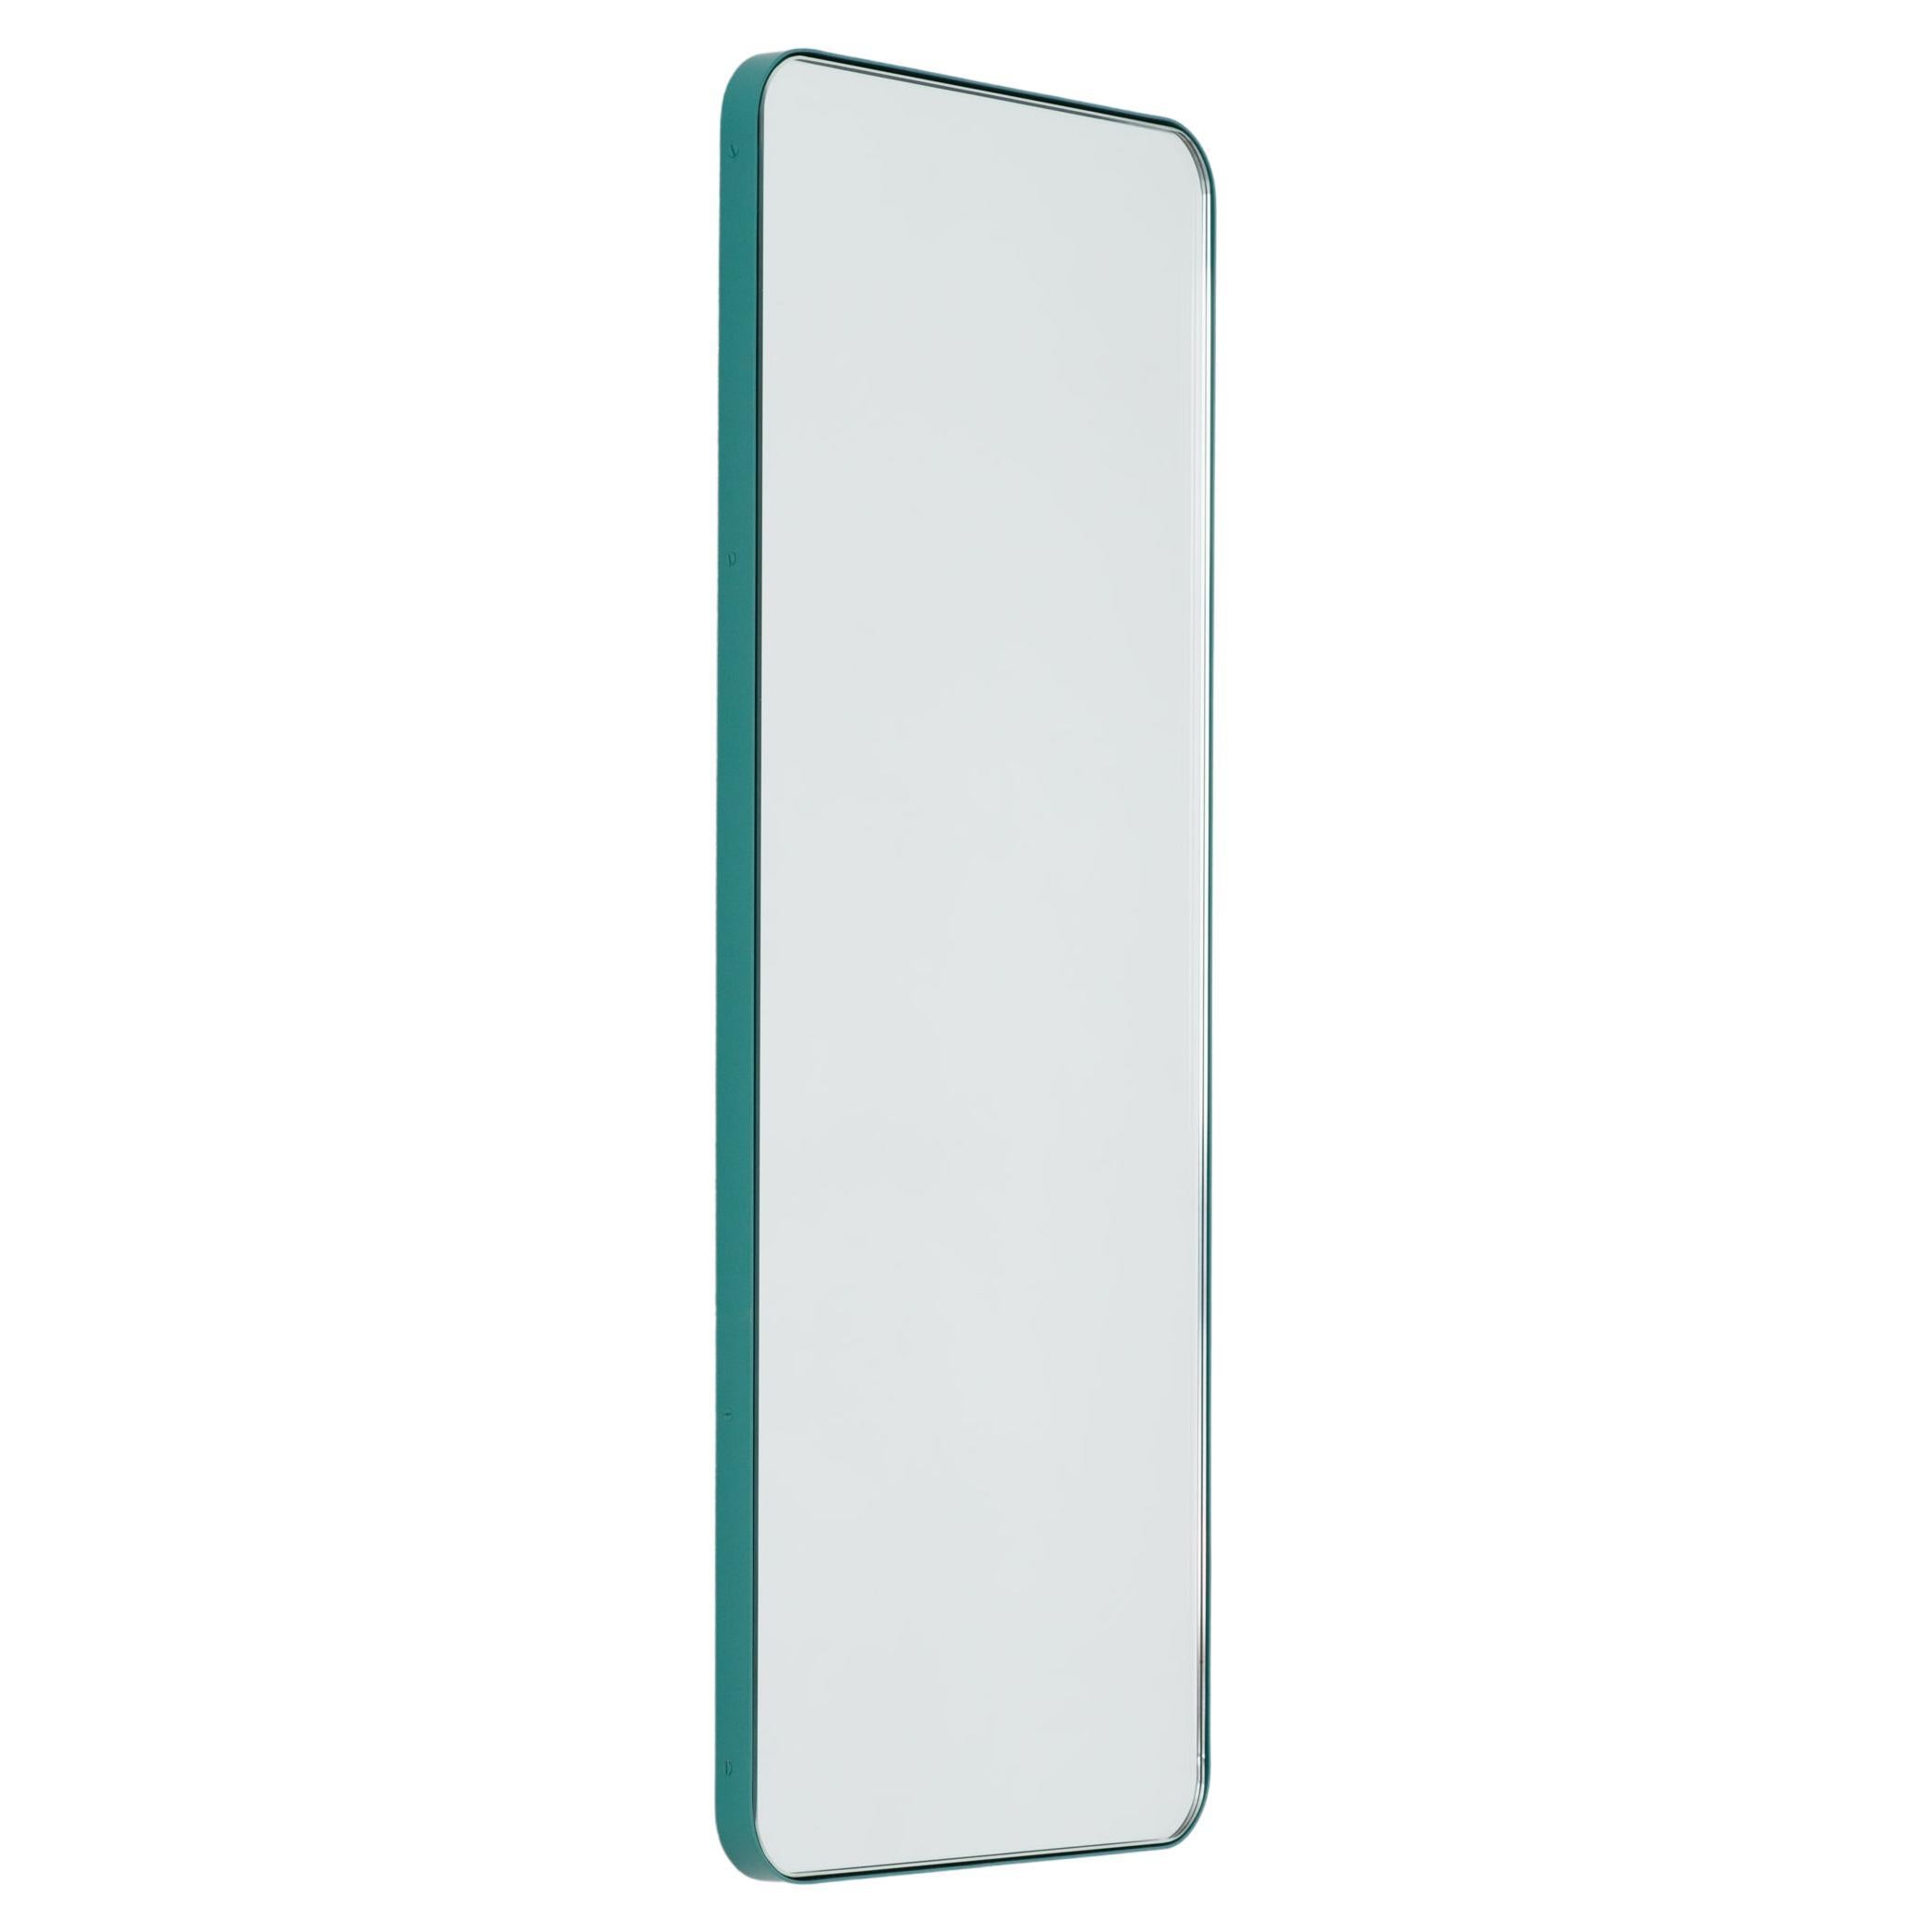 Quadris Rectangular Modern Mirror with Mint Turquoise Frame, Bespoke, Oversized